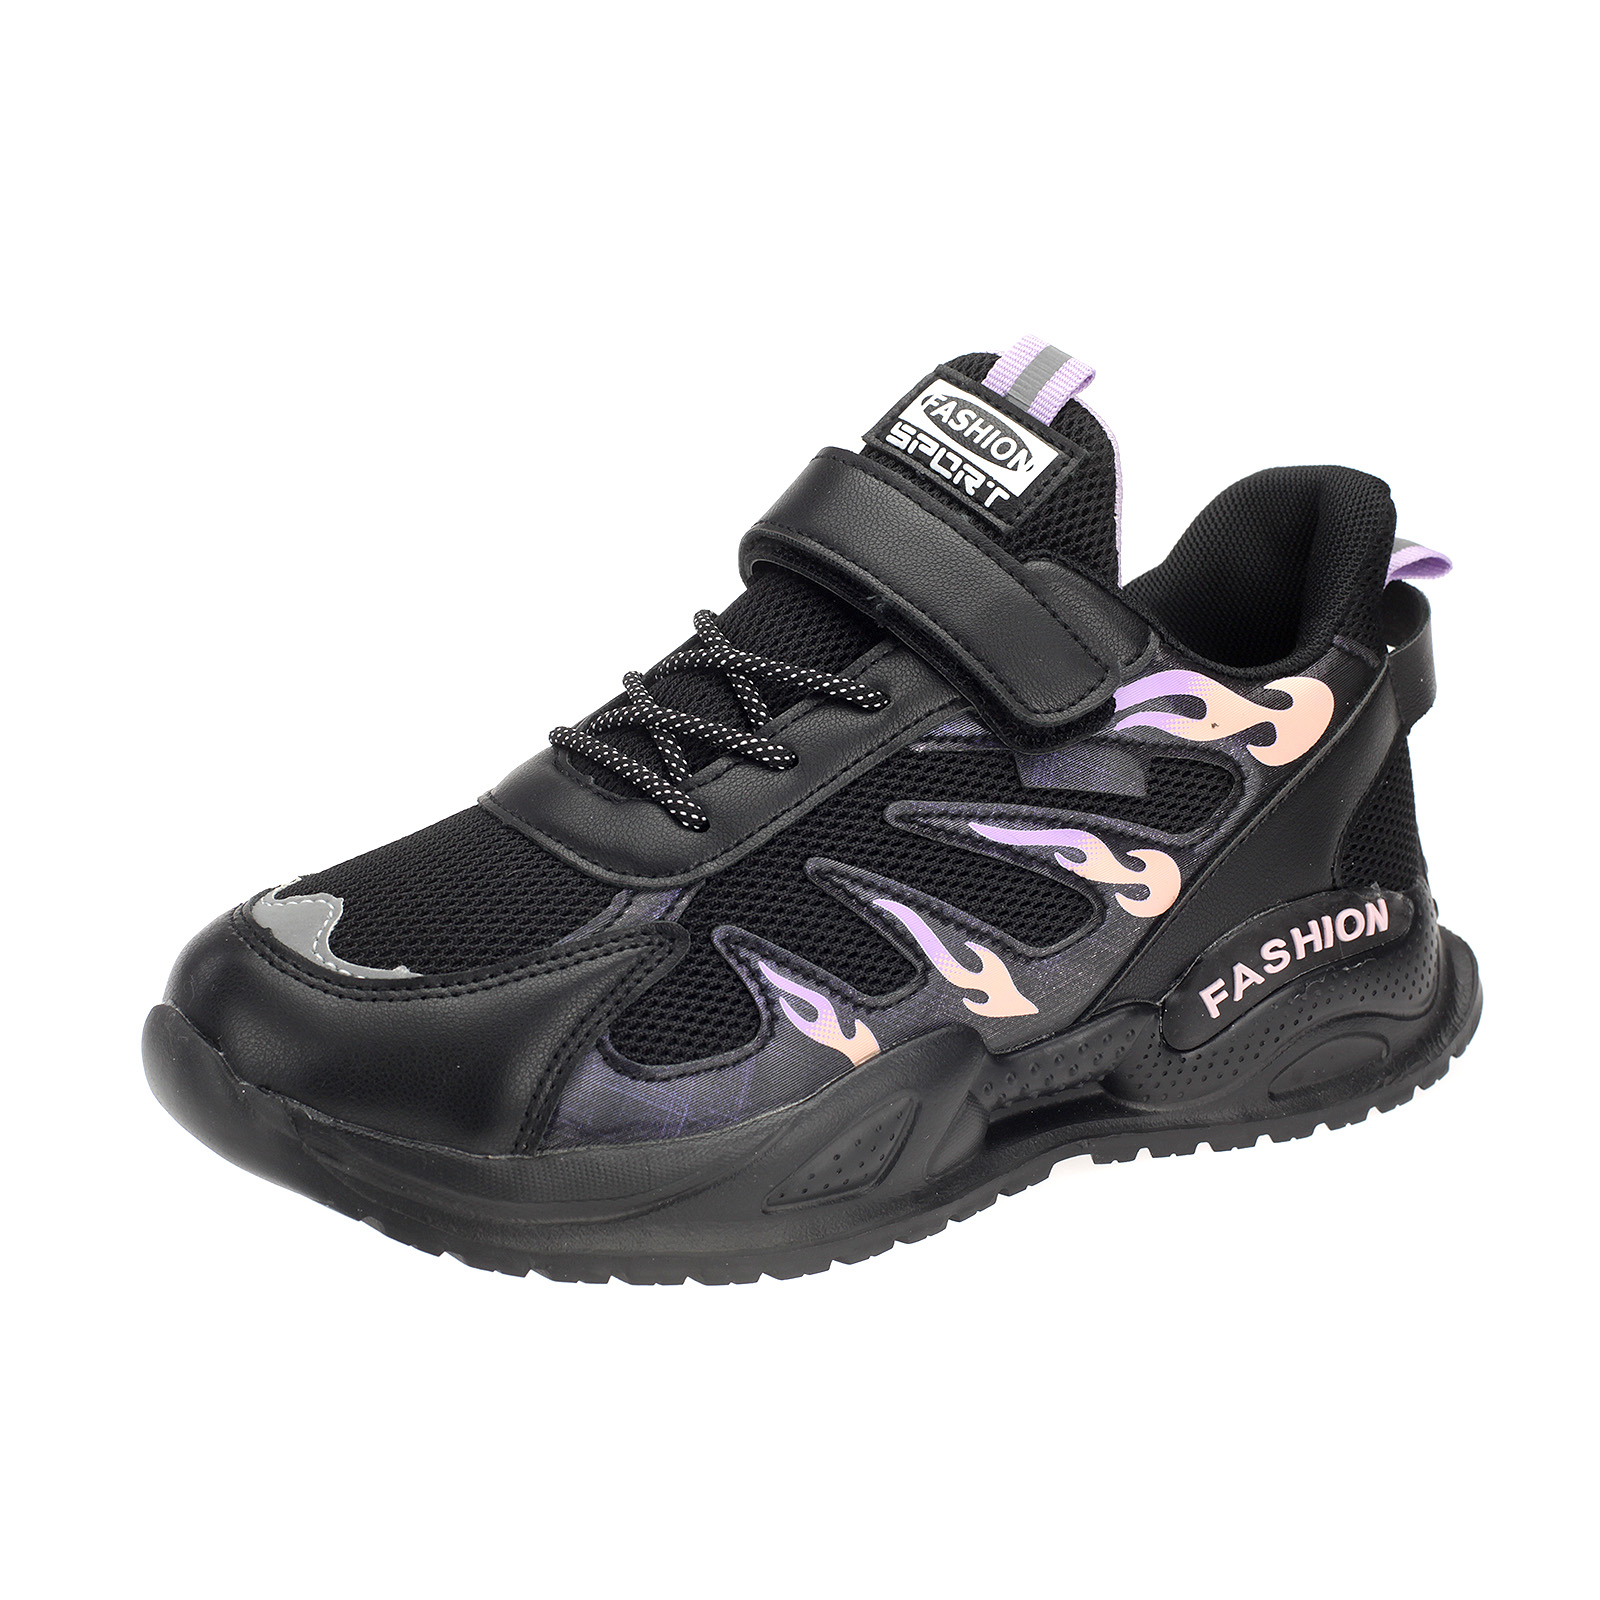 Kinderschuhe Sneaker mit Klettverschluss Sportschuhe 4060 Schwarz Lila